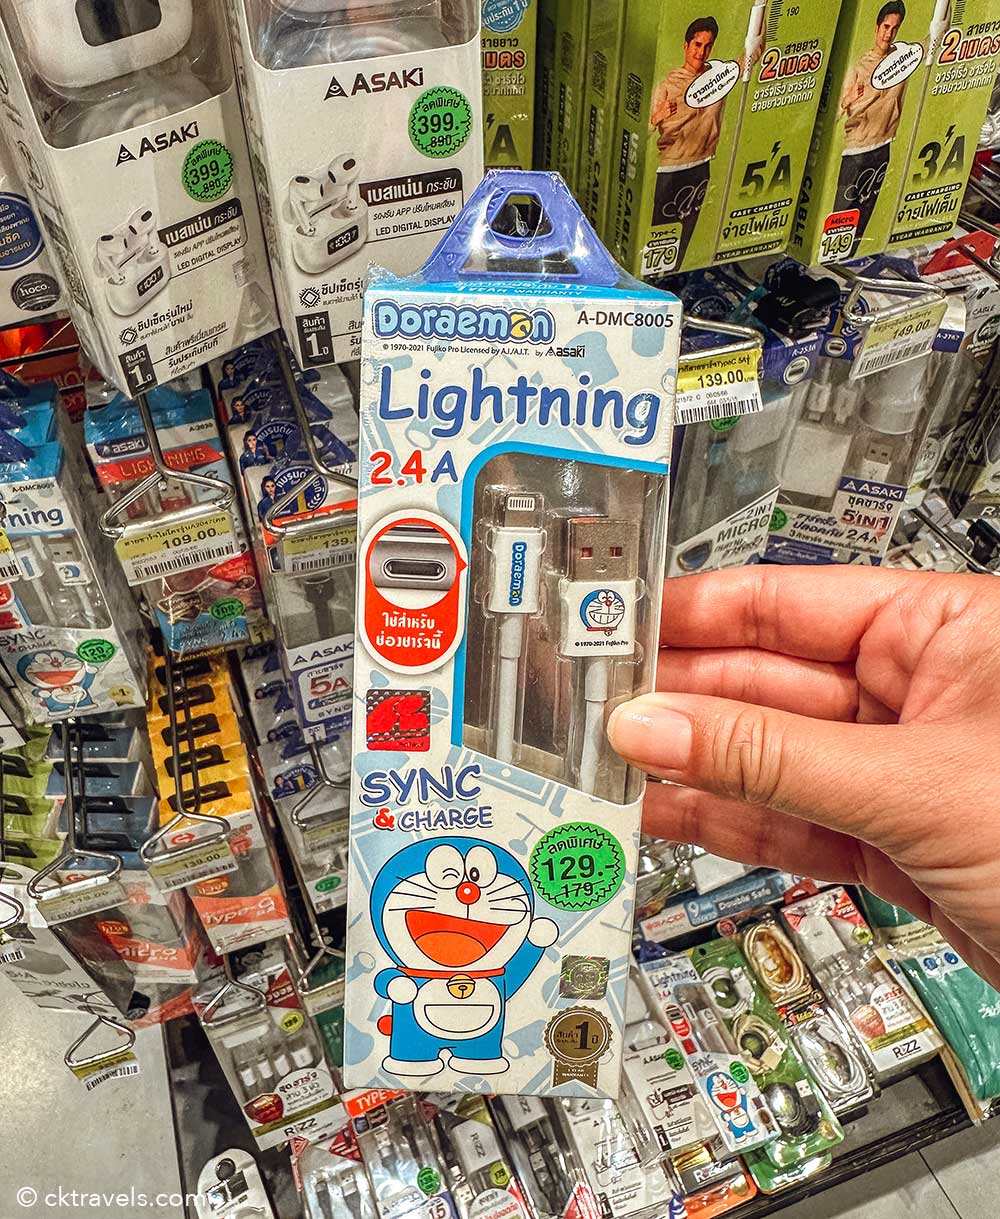 Doraemon lightning cable phone